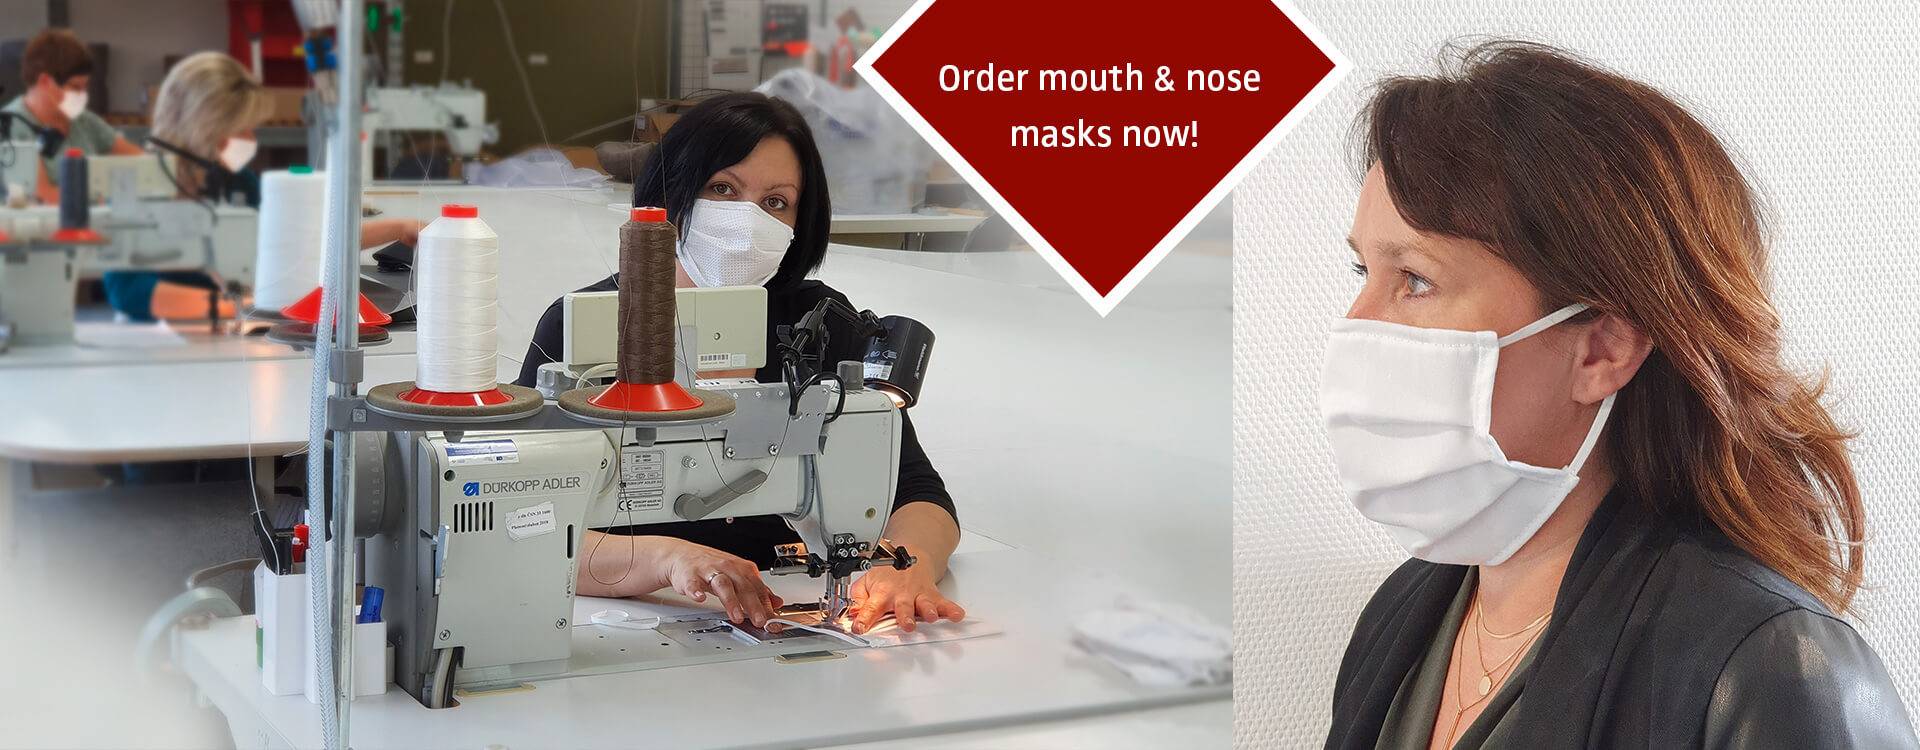 Order mouth & nose masks now!